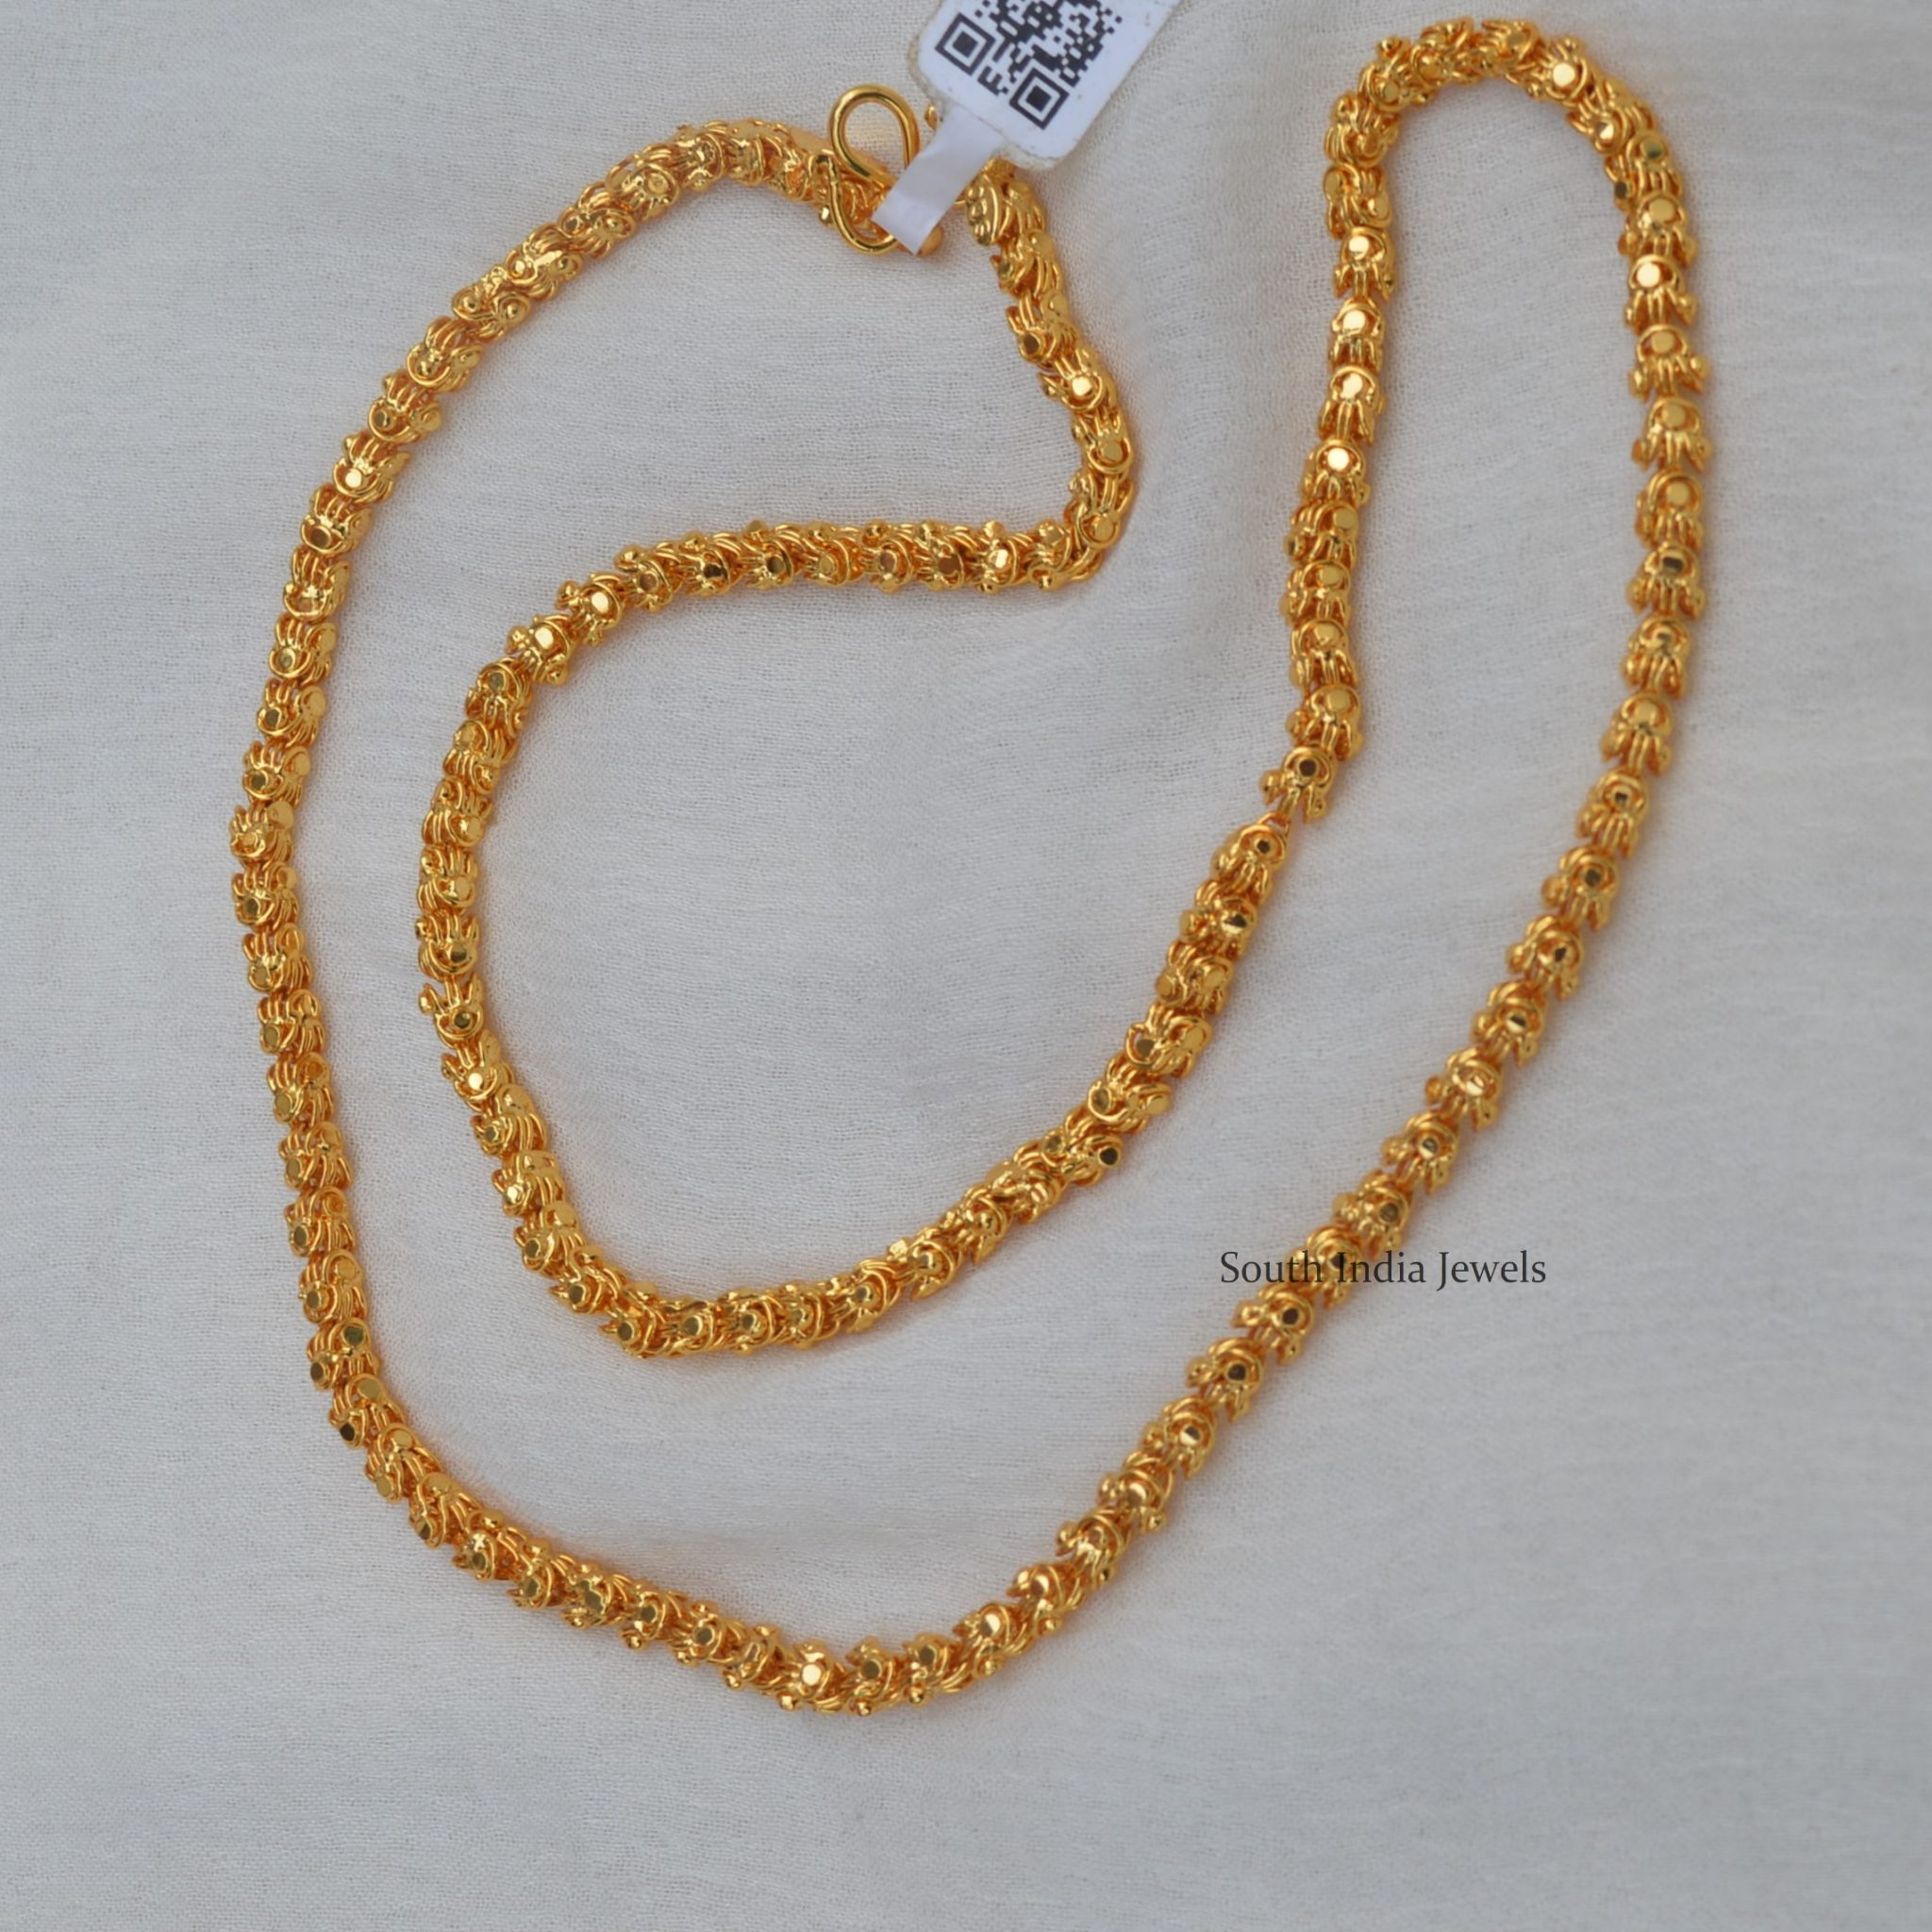 Beautiful Gold Polish Chain - South India Jewels